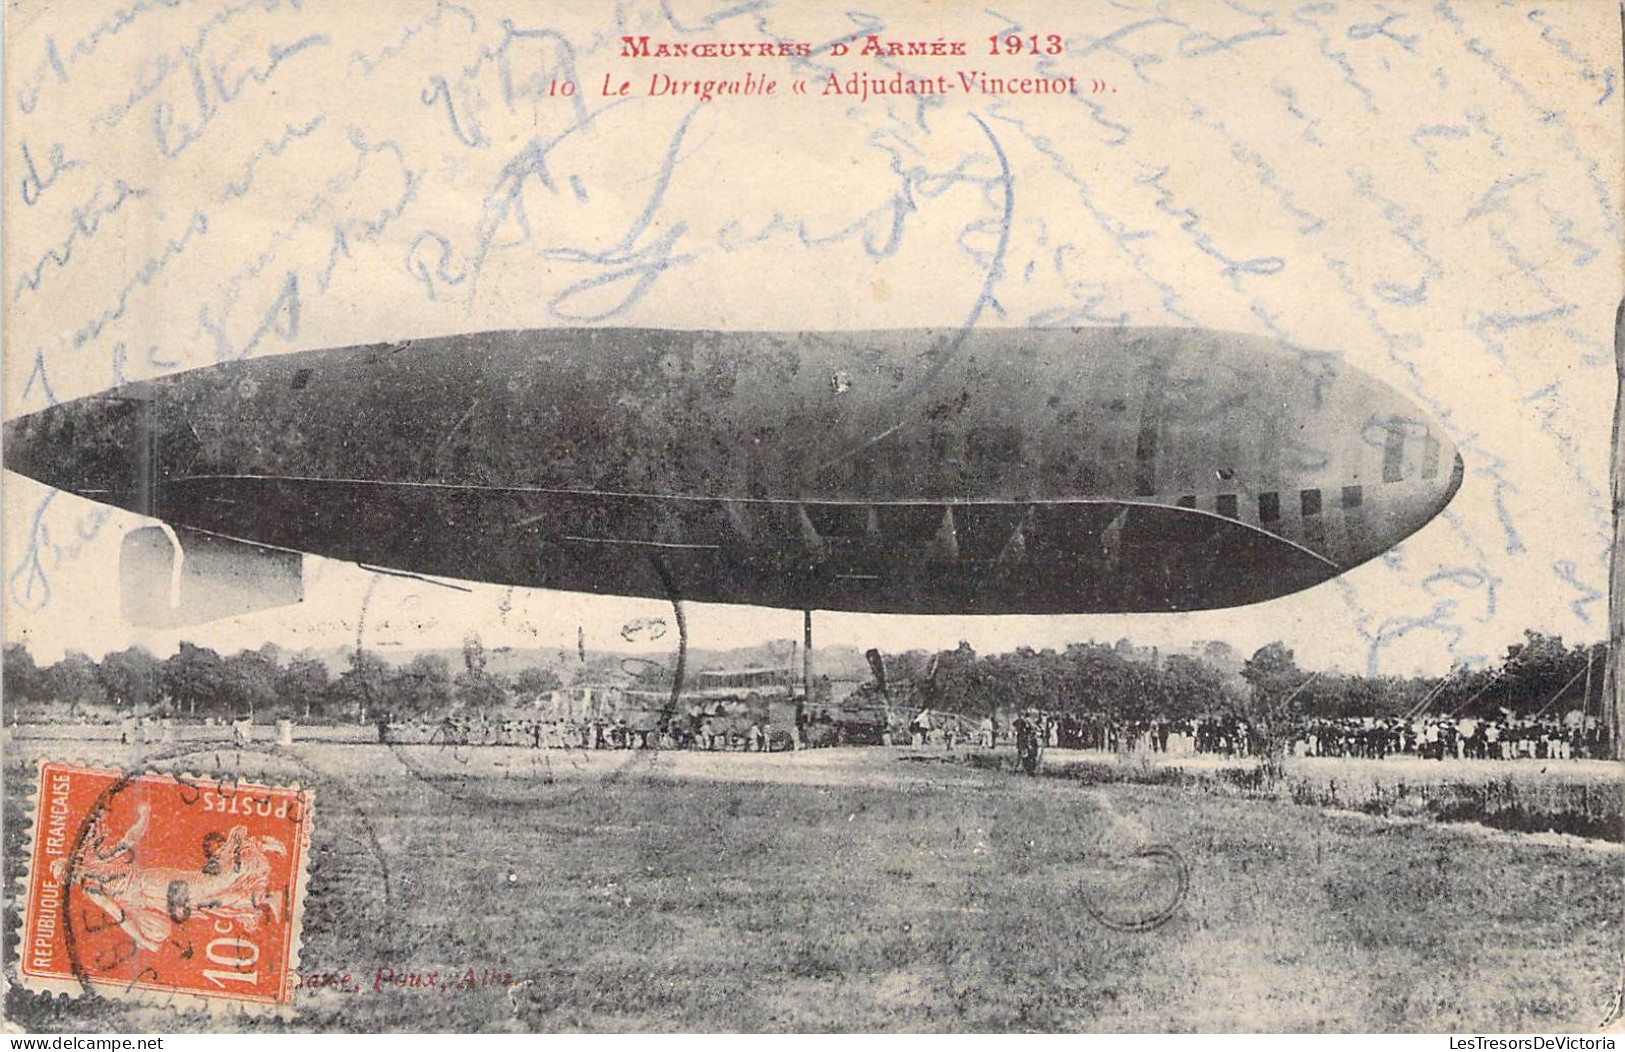 MANOEUVRES - Manoeuvre D'armée 1913 - Le Dirigeable " Adjudant Vincenot" - Carte Postale Ancienne - Manöver